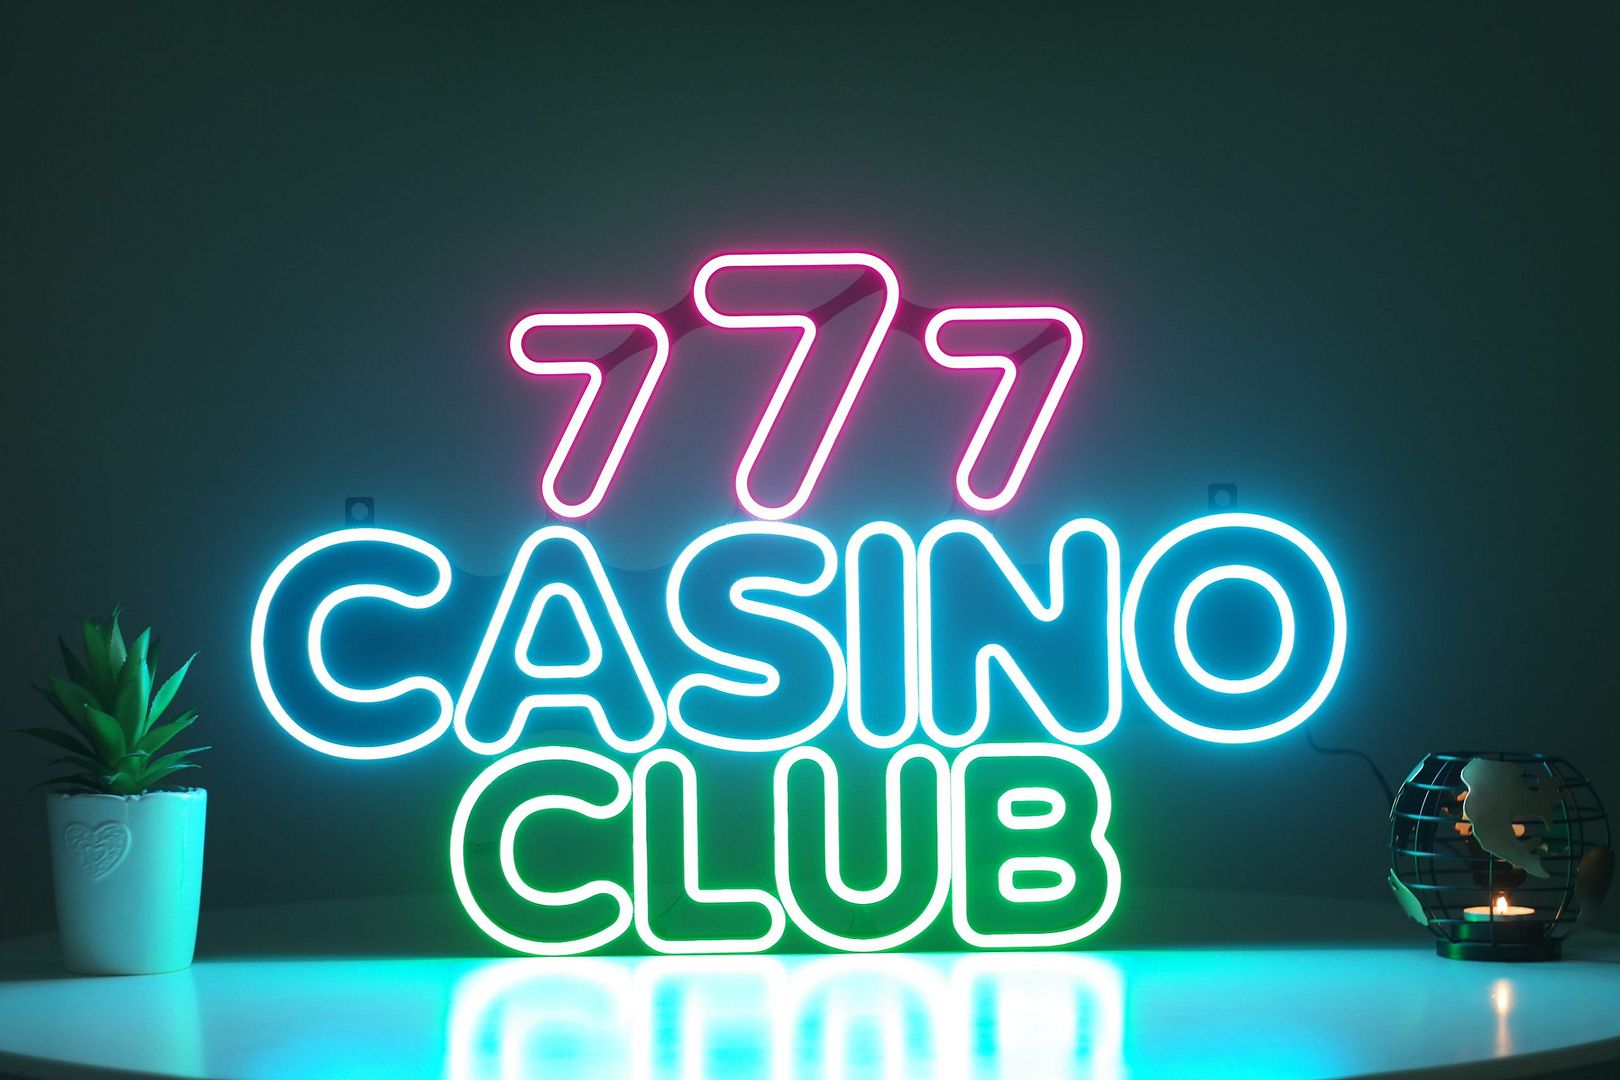 777 Casino Club Neon Sign